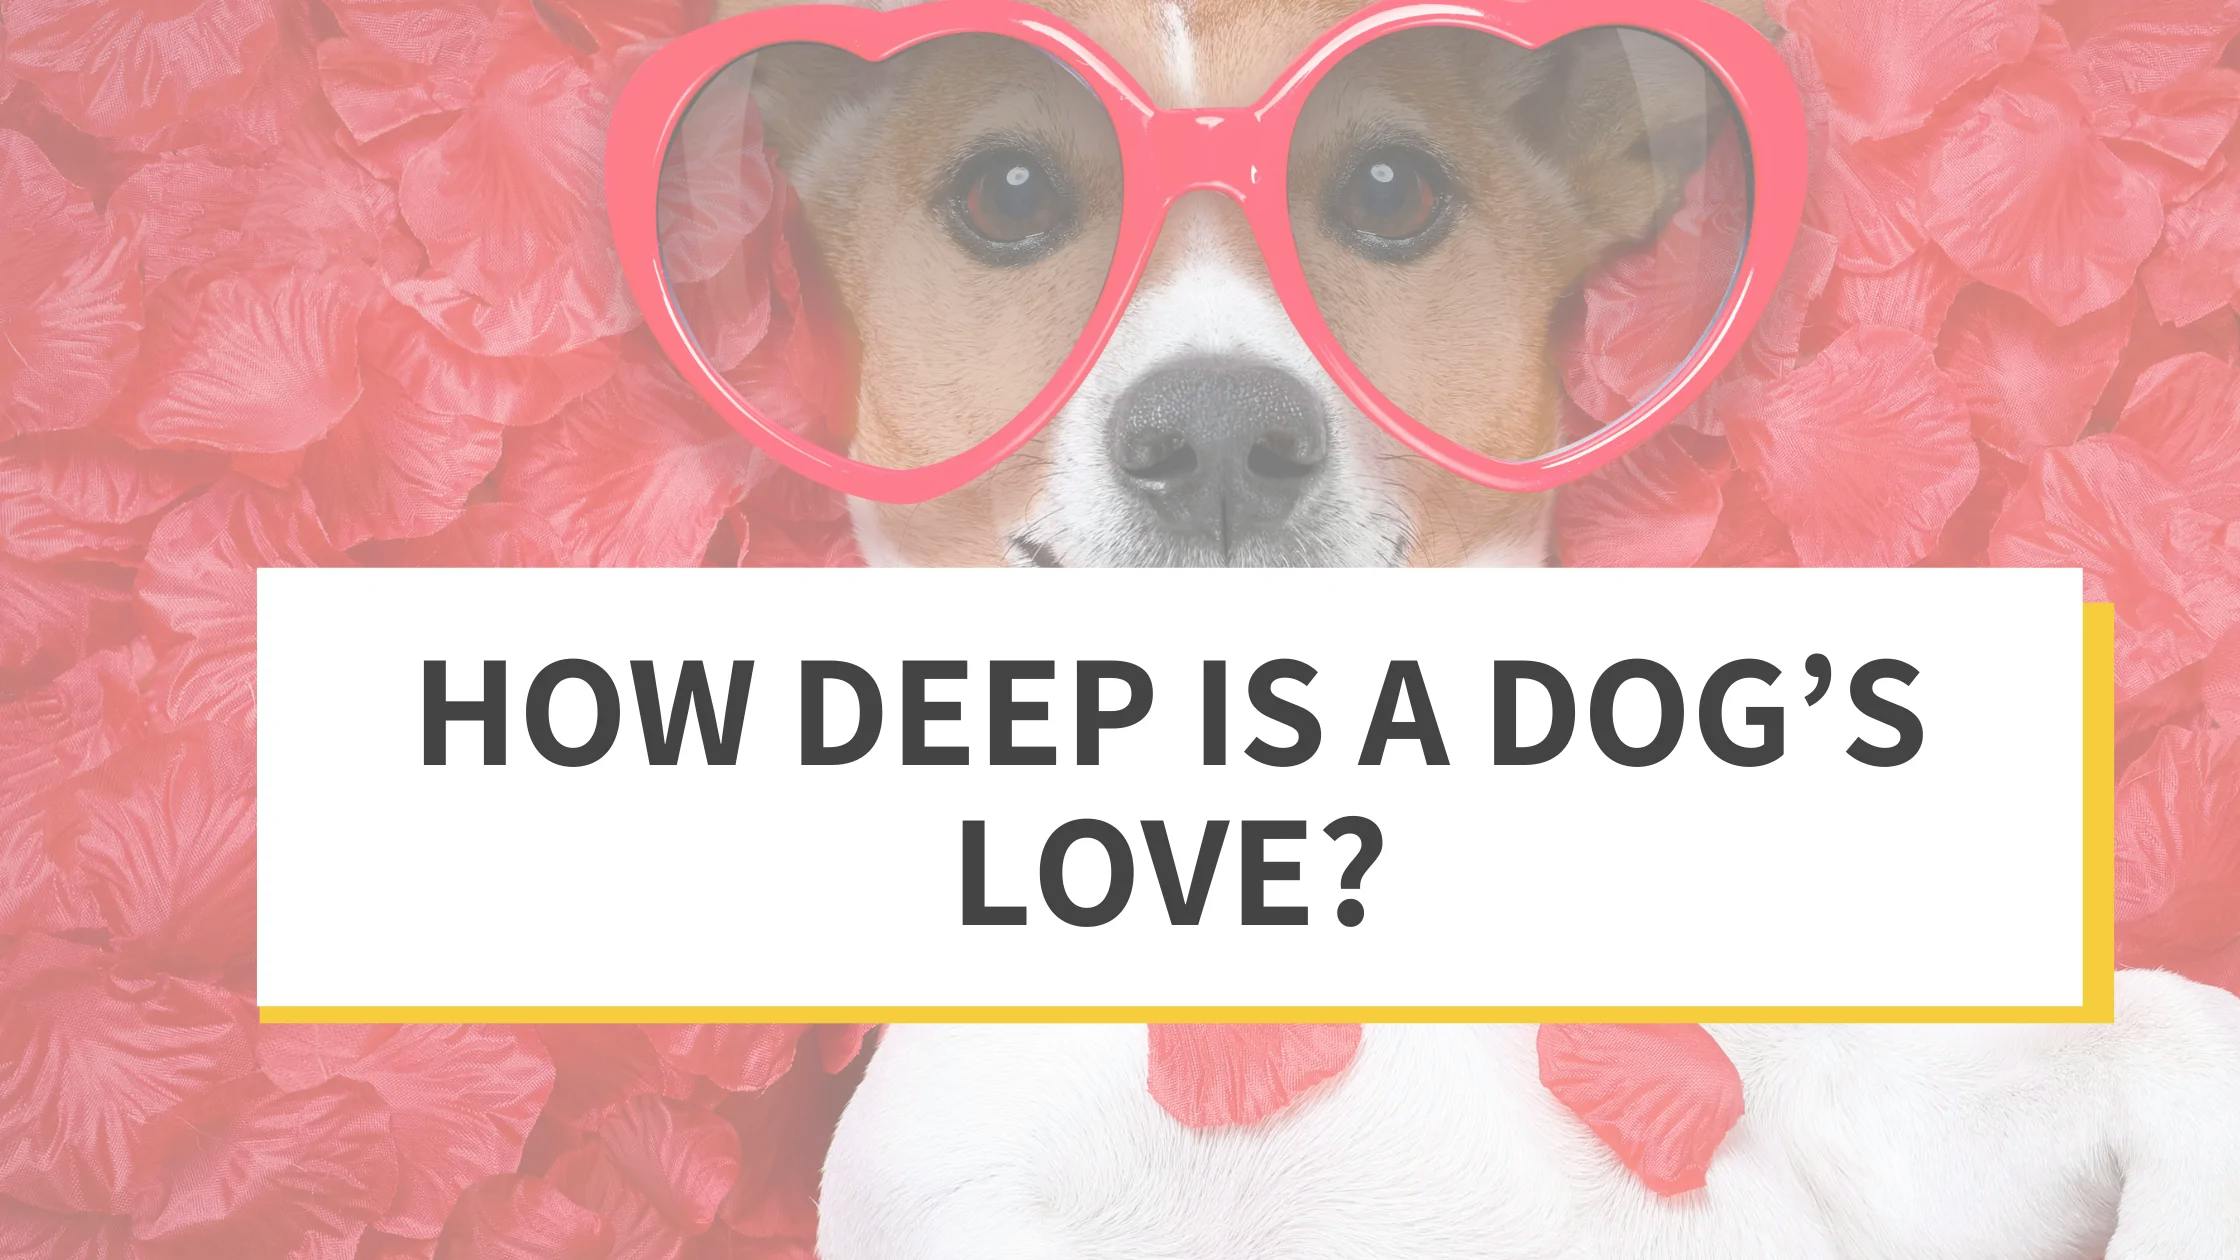 How Deep Is a Dog’s Love?